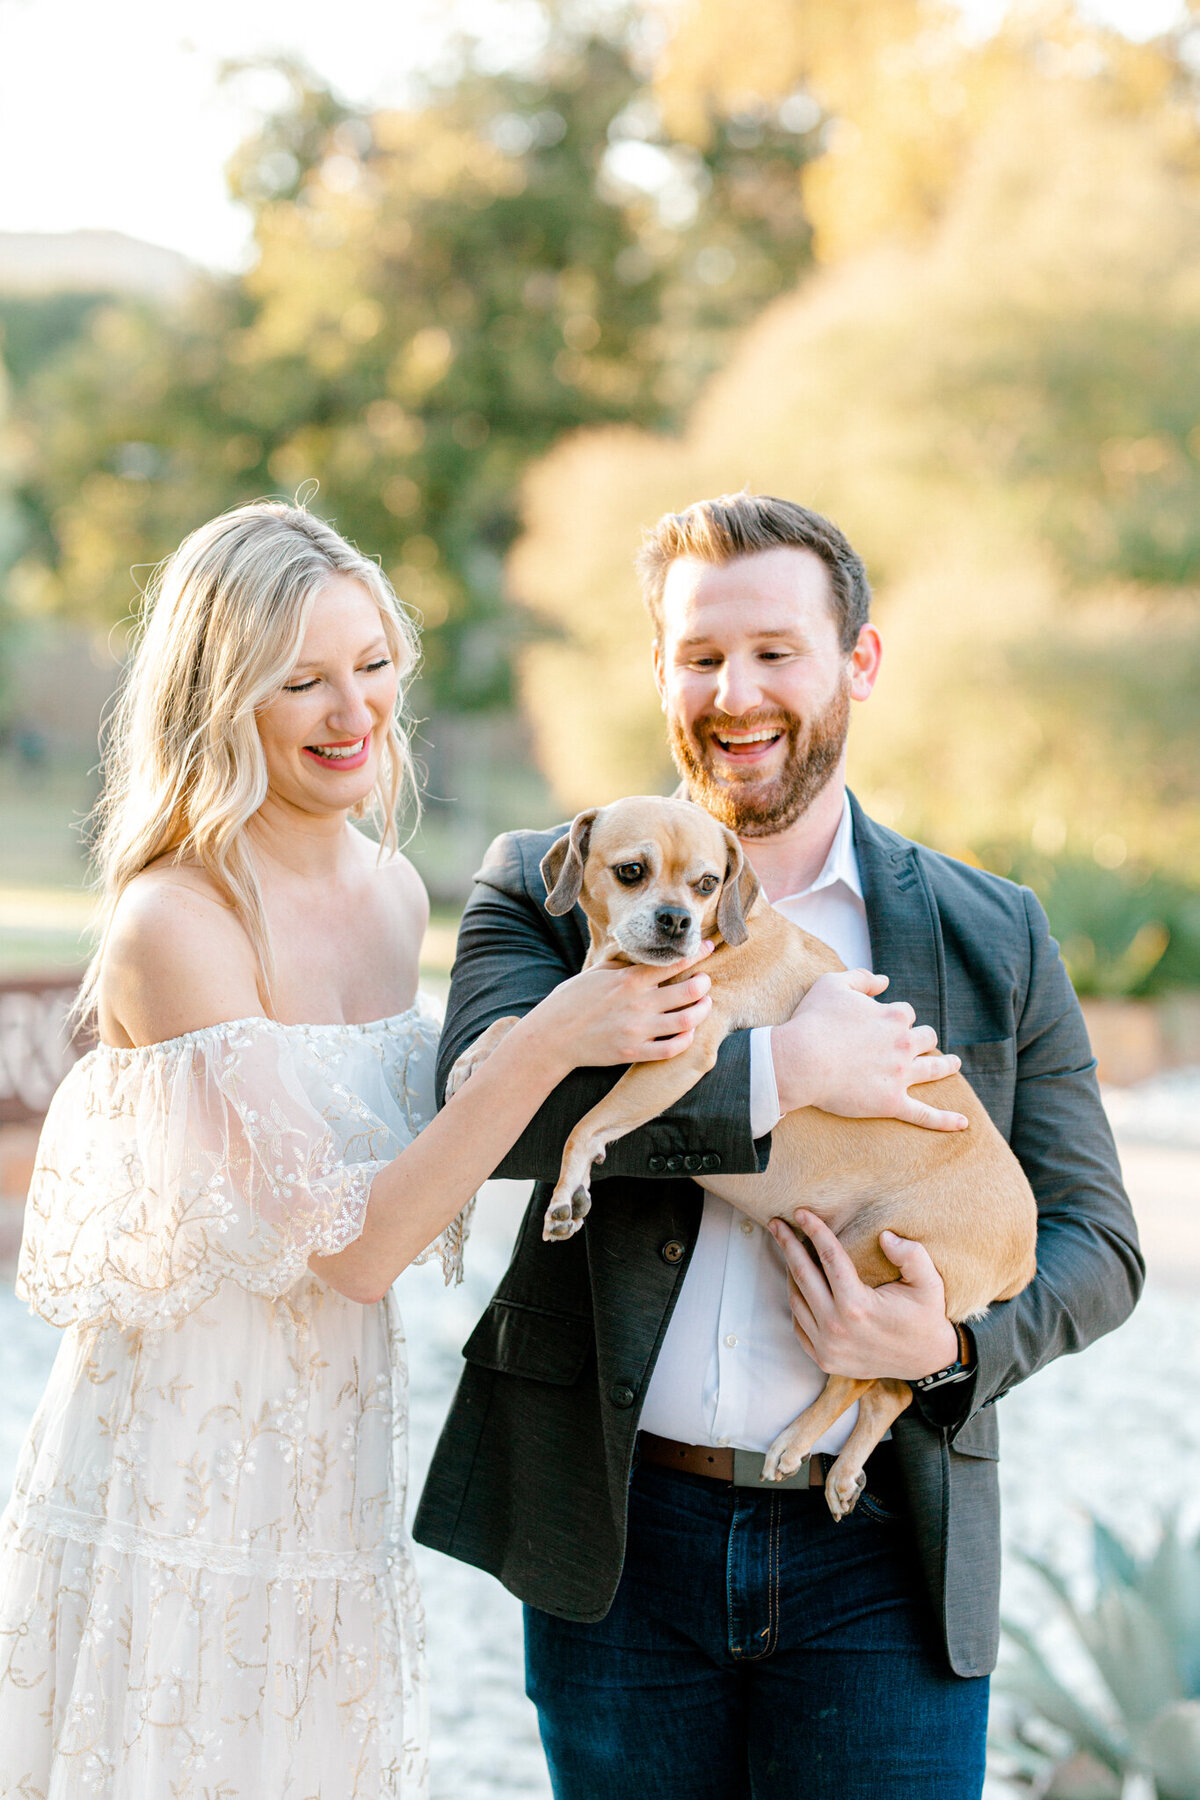 Jessica & Blake Engagement Session at Reverchon Park | Dallas Wedding Photographer-4